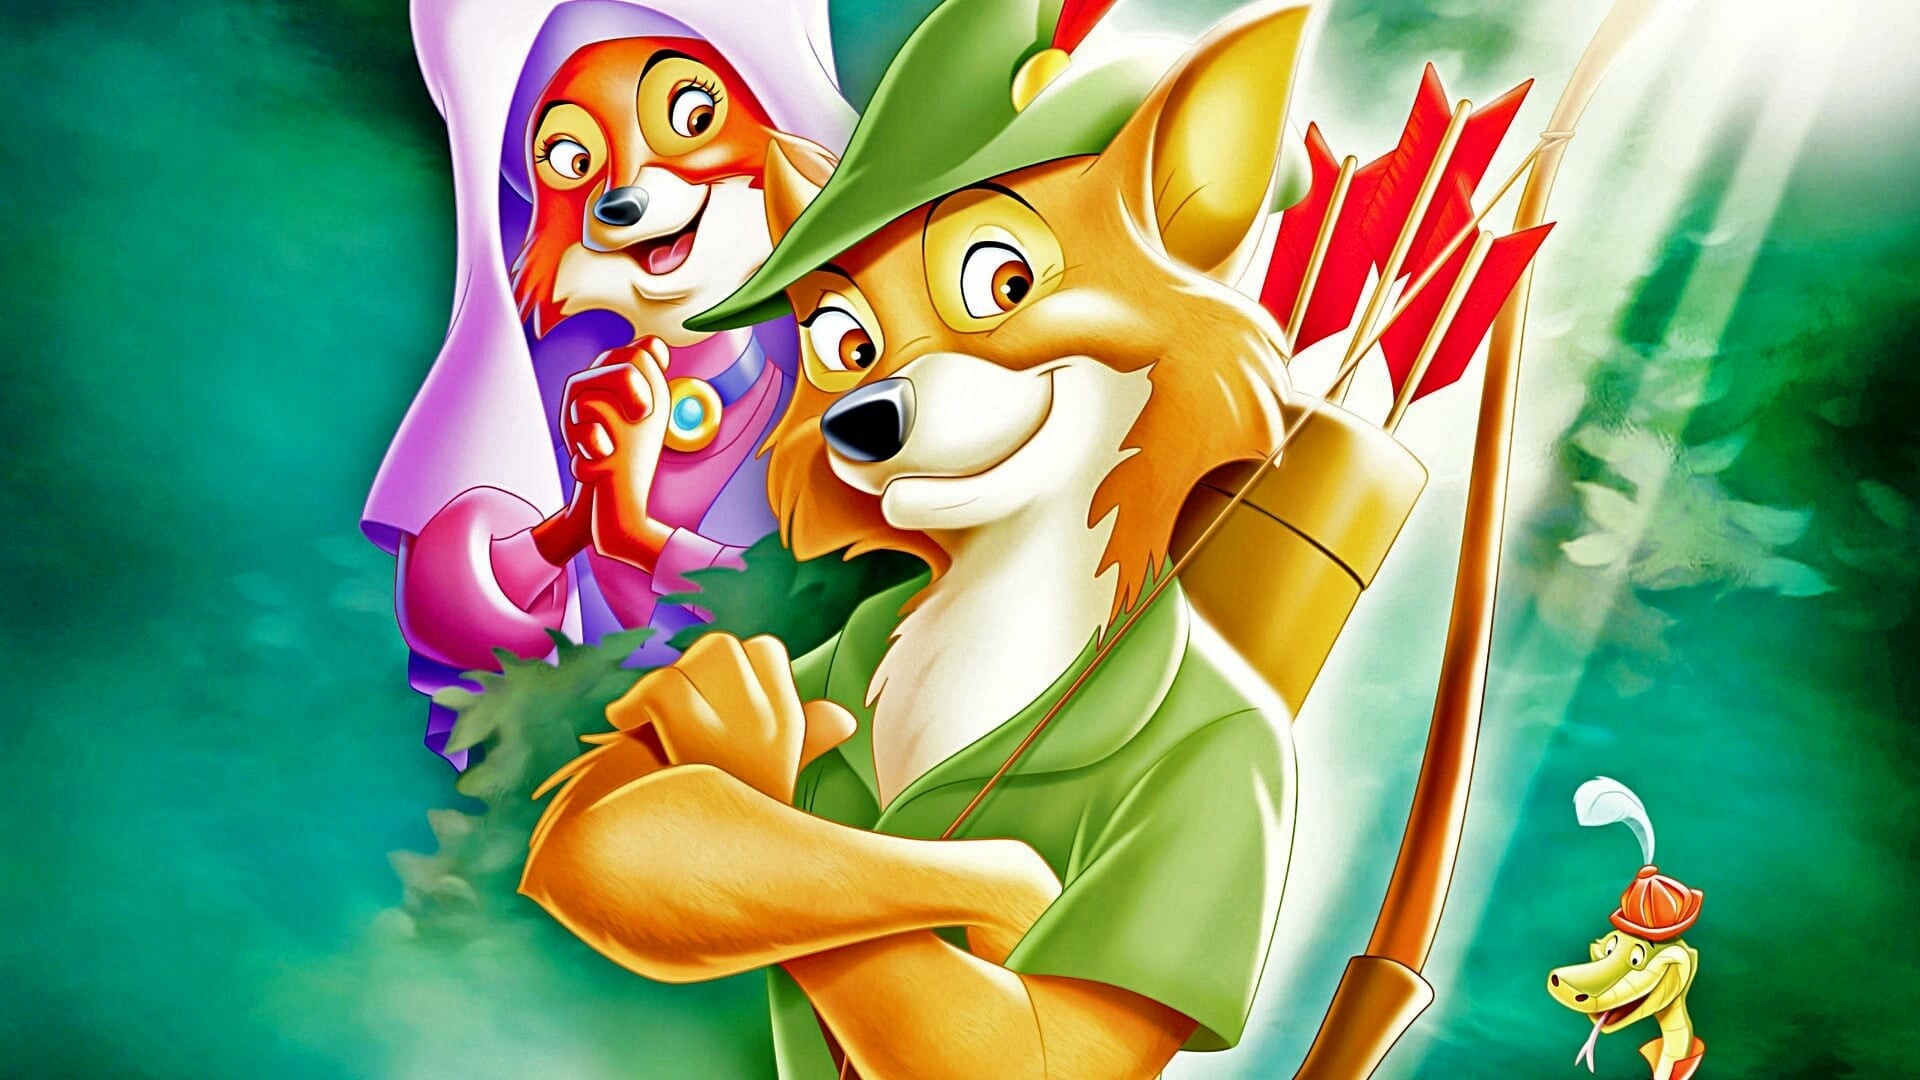 Robin Hood (Cartoon): The animated film, was released on November 8, 1973. 1920x1080 Full HD Wallpaper.